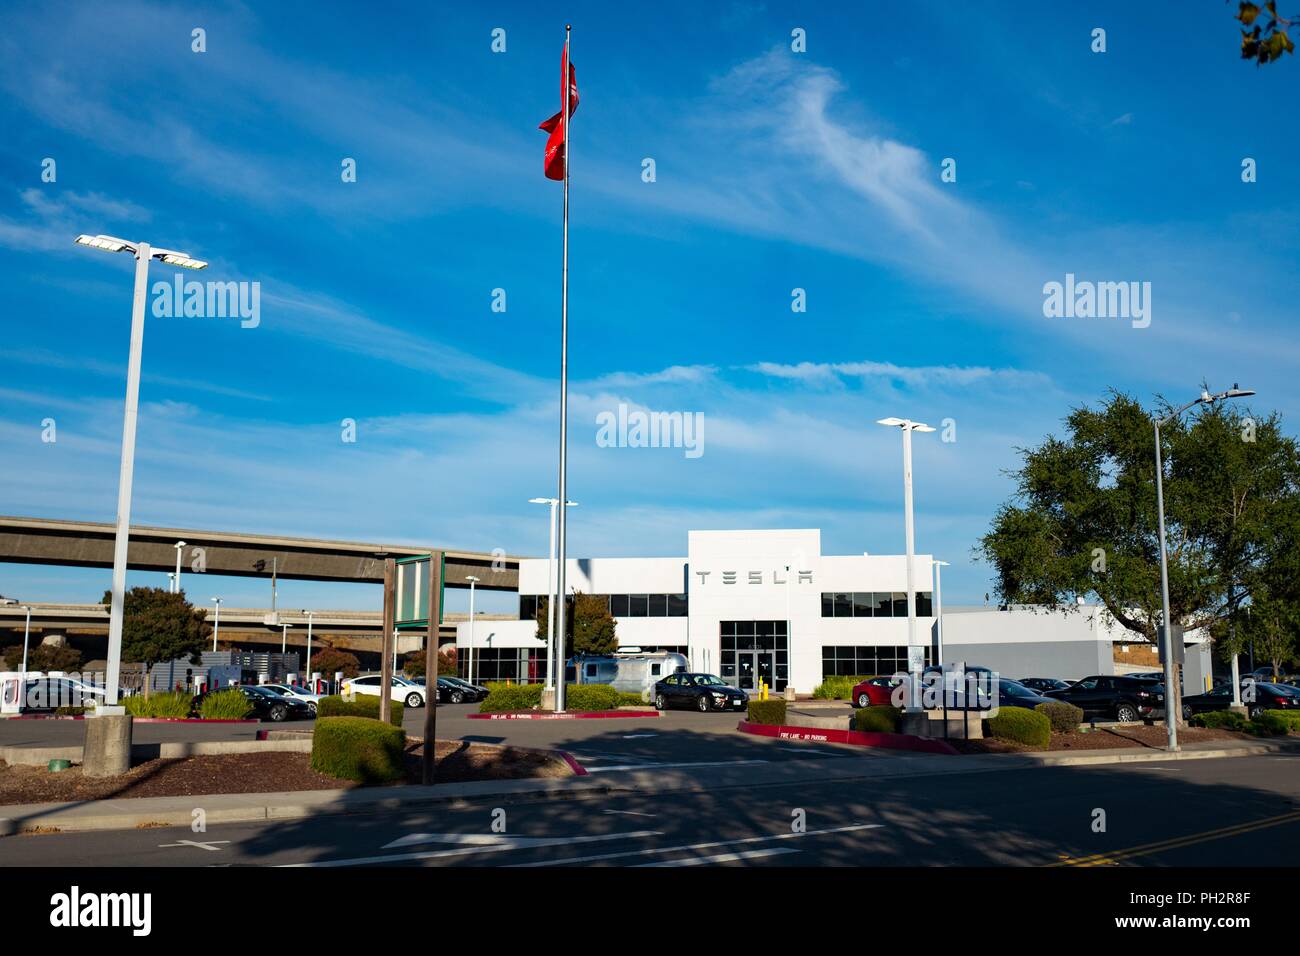 Tesla flag flying outside large Tesla dealership, with multiple parked Tesla Motors automobiles visible, Pleasanton, California, July 23, 2018. () Stock Photo